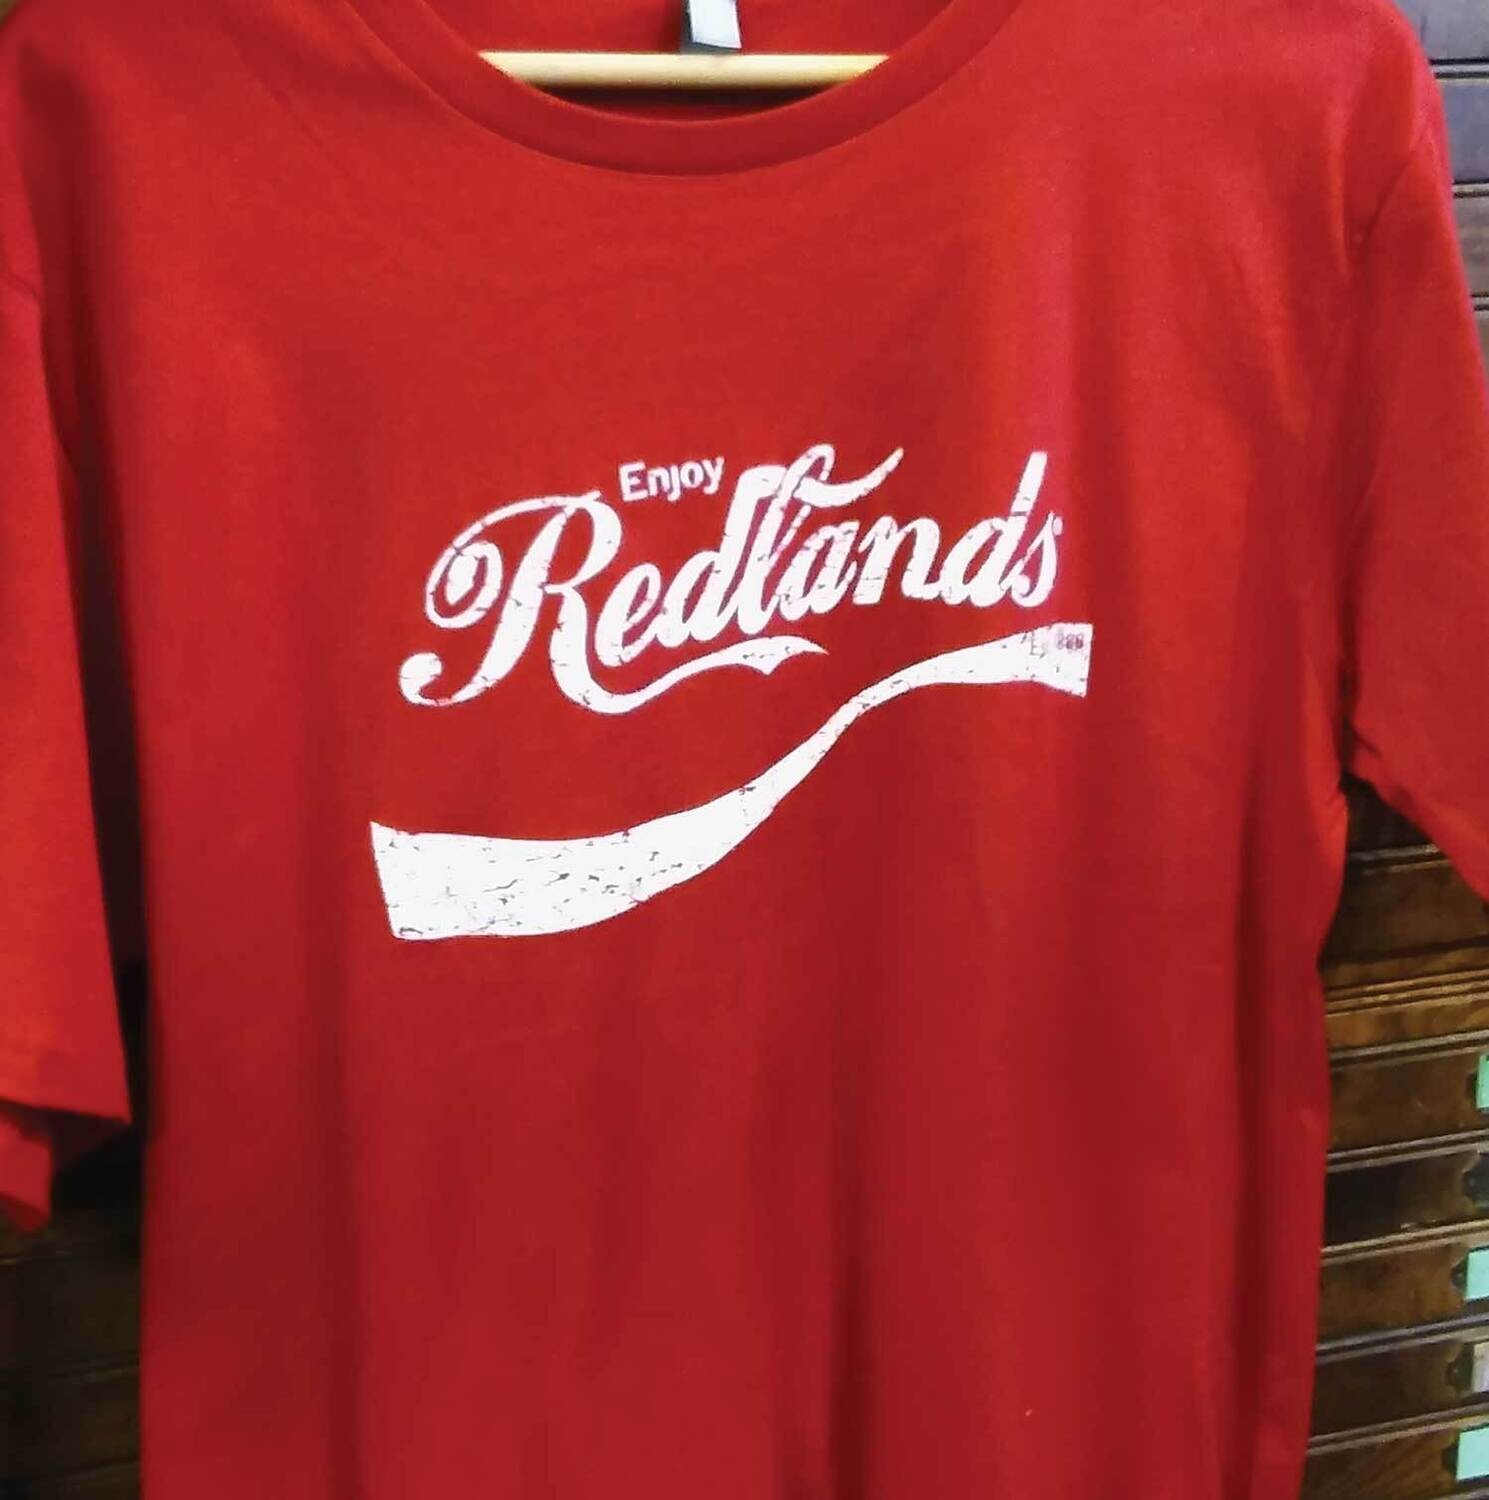 Enjoy Redlands T-shirt